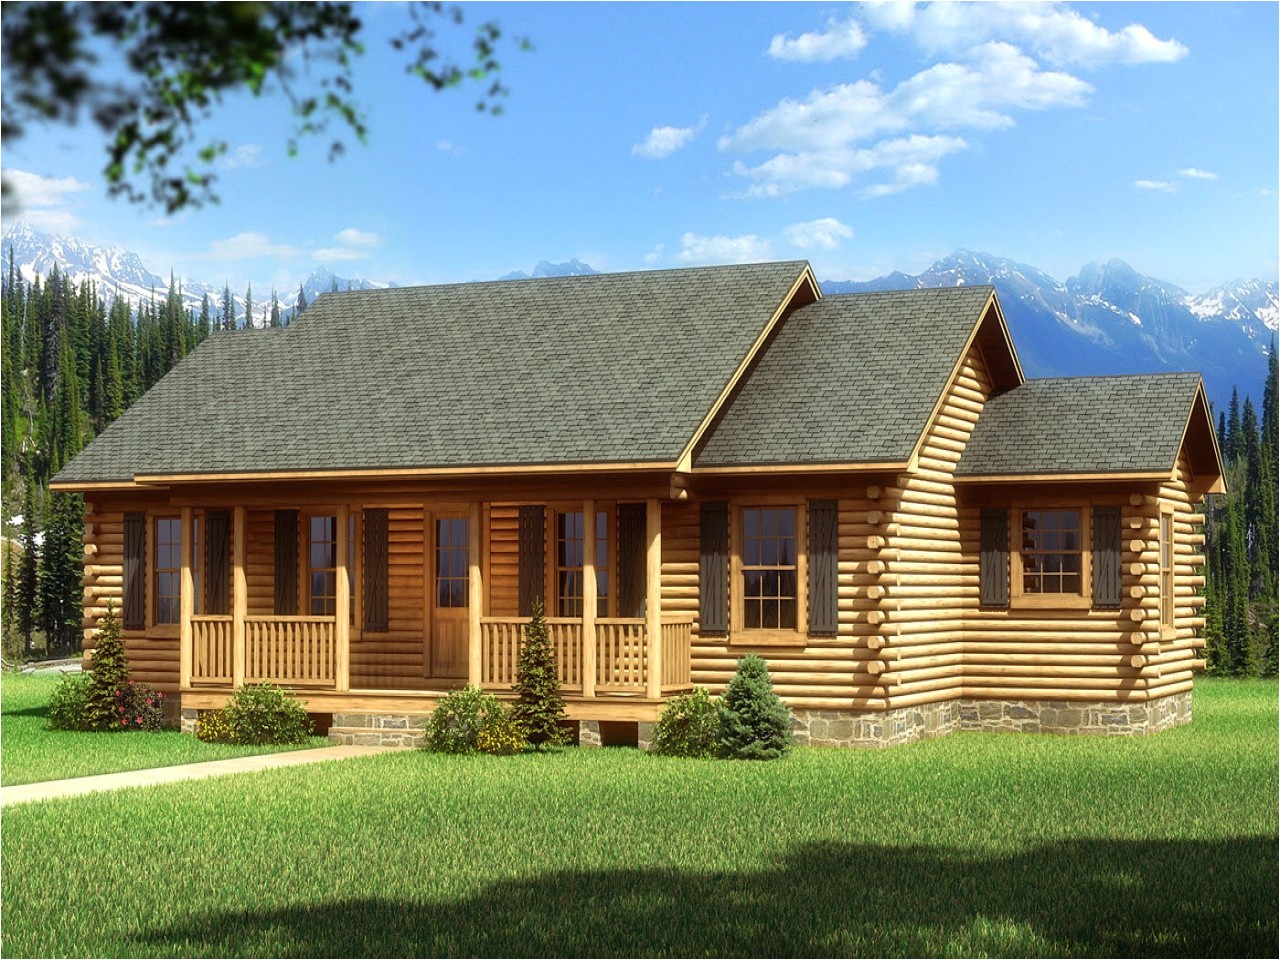 d1f1cf09d5a61419 single story log cabin homes plans single story cabin plans mountain